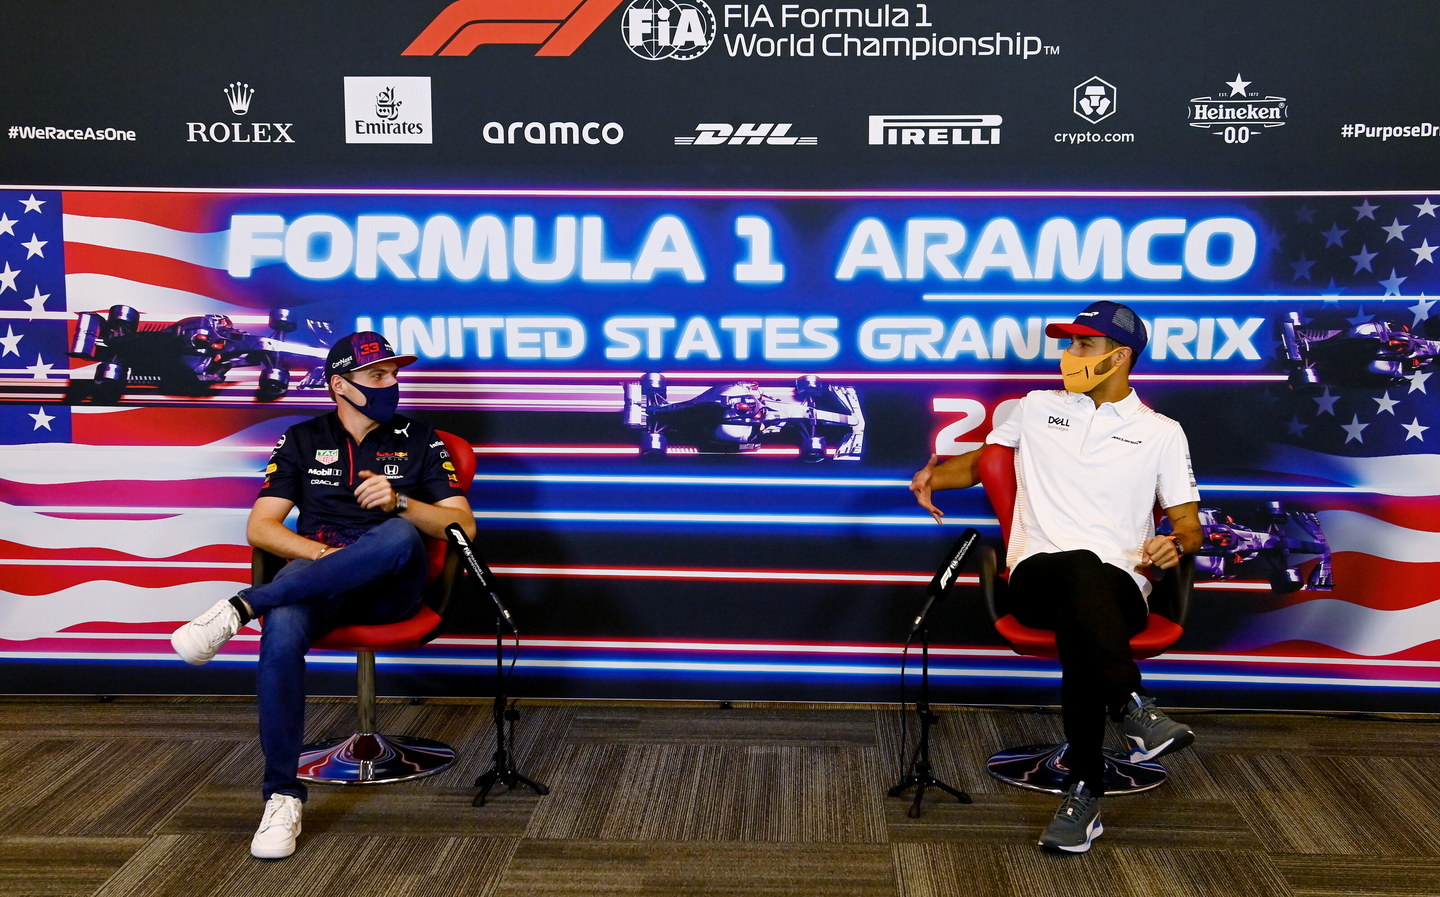 Red Bull Racing drivers ahead of the 2021 US GP